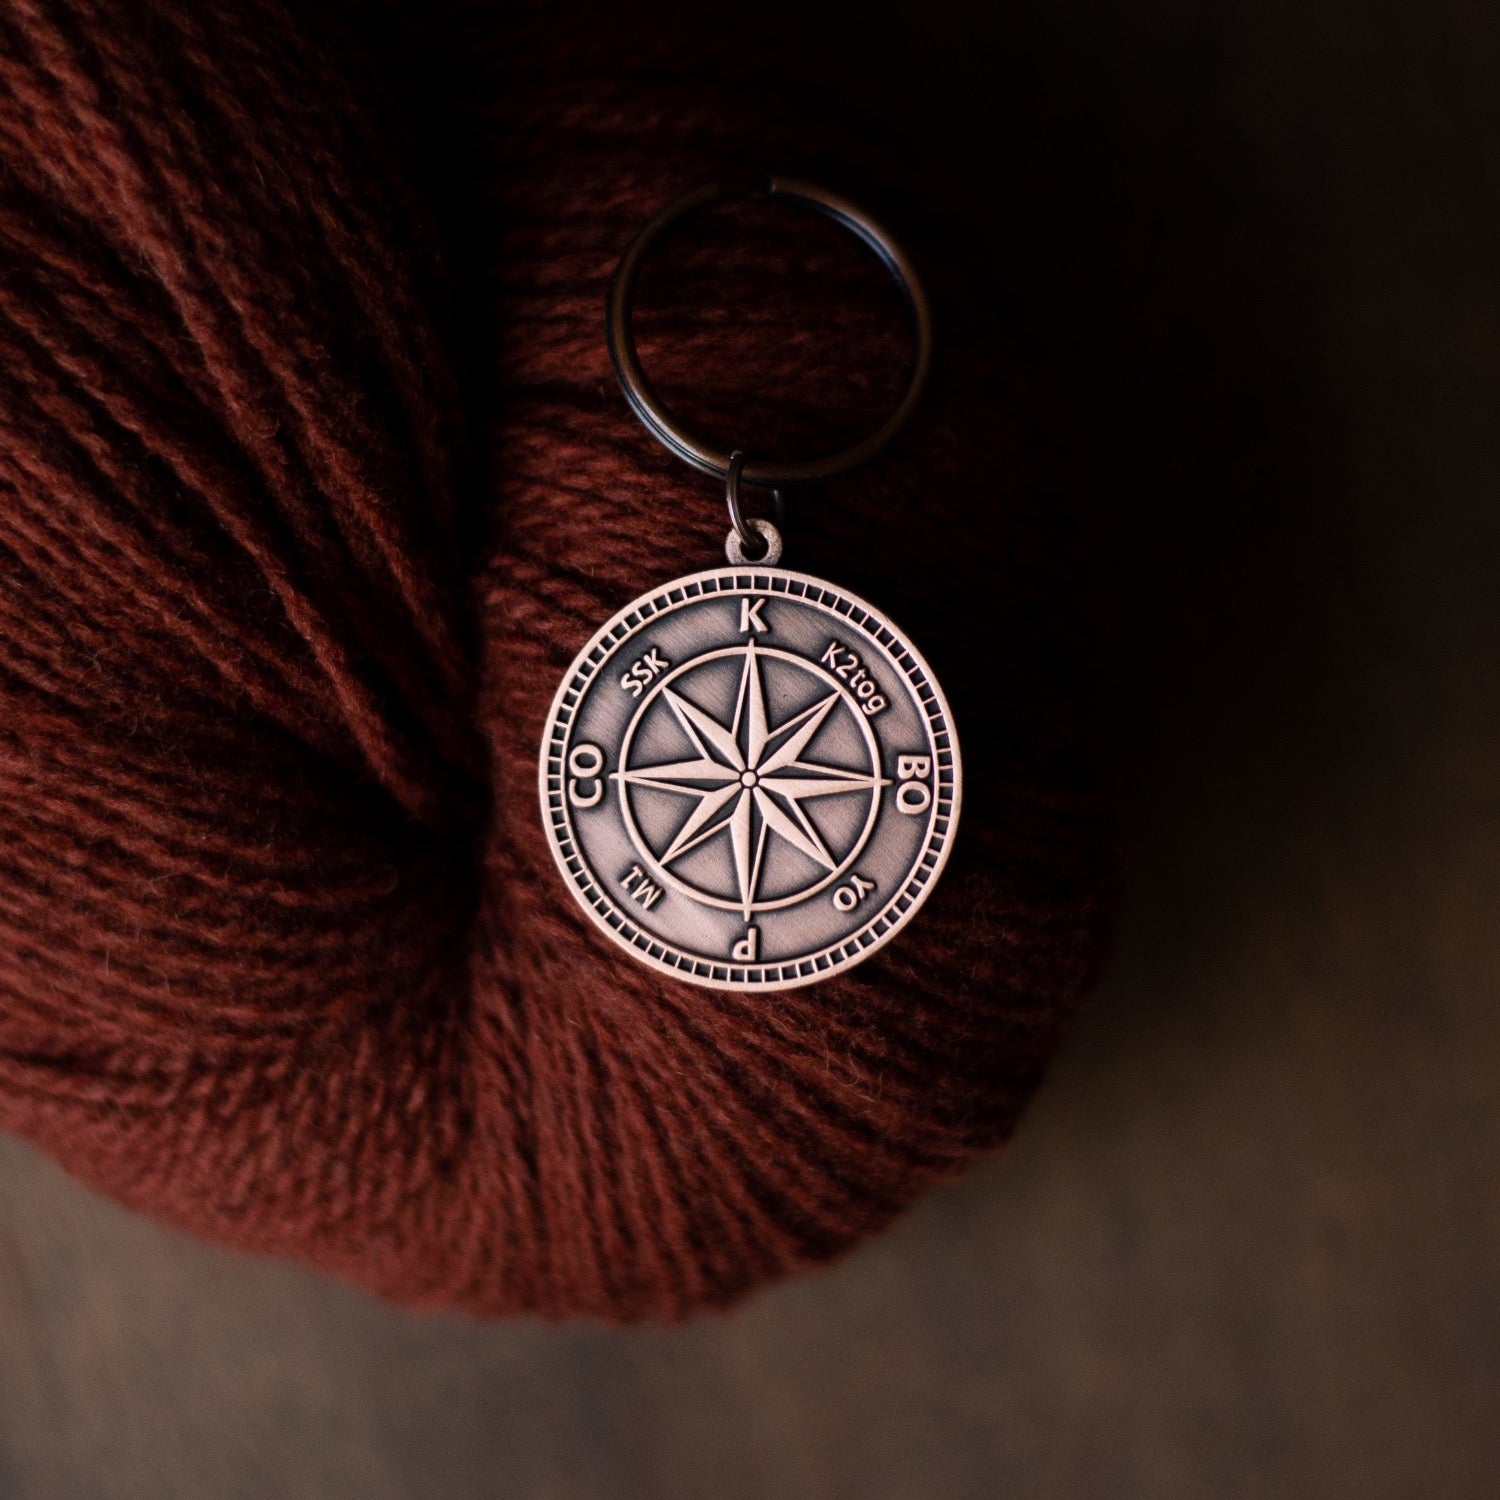 knitter's compass keychain